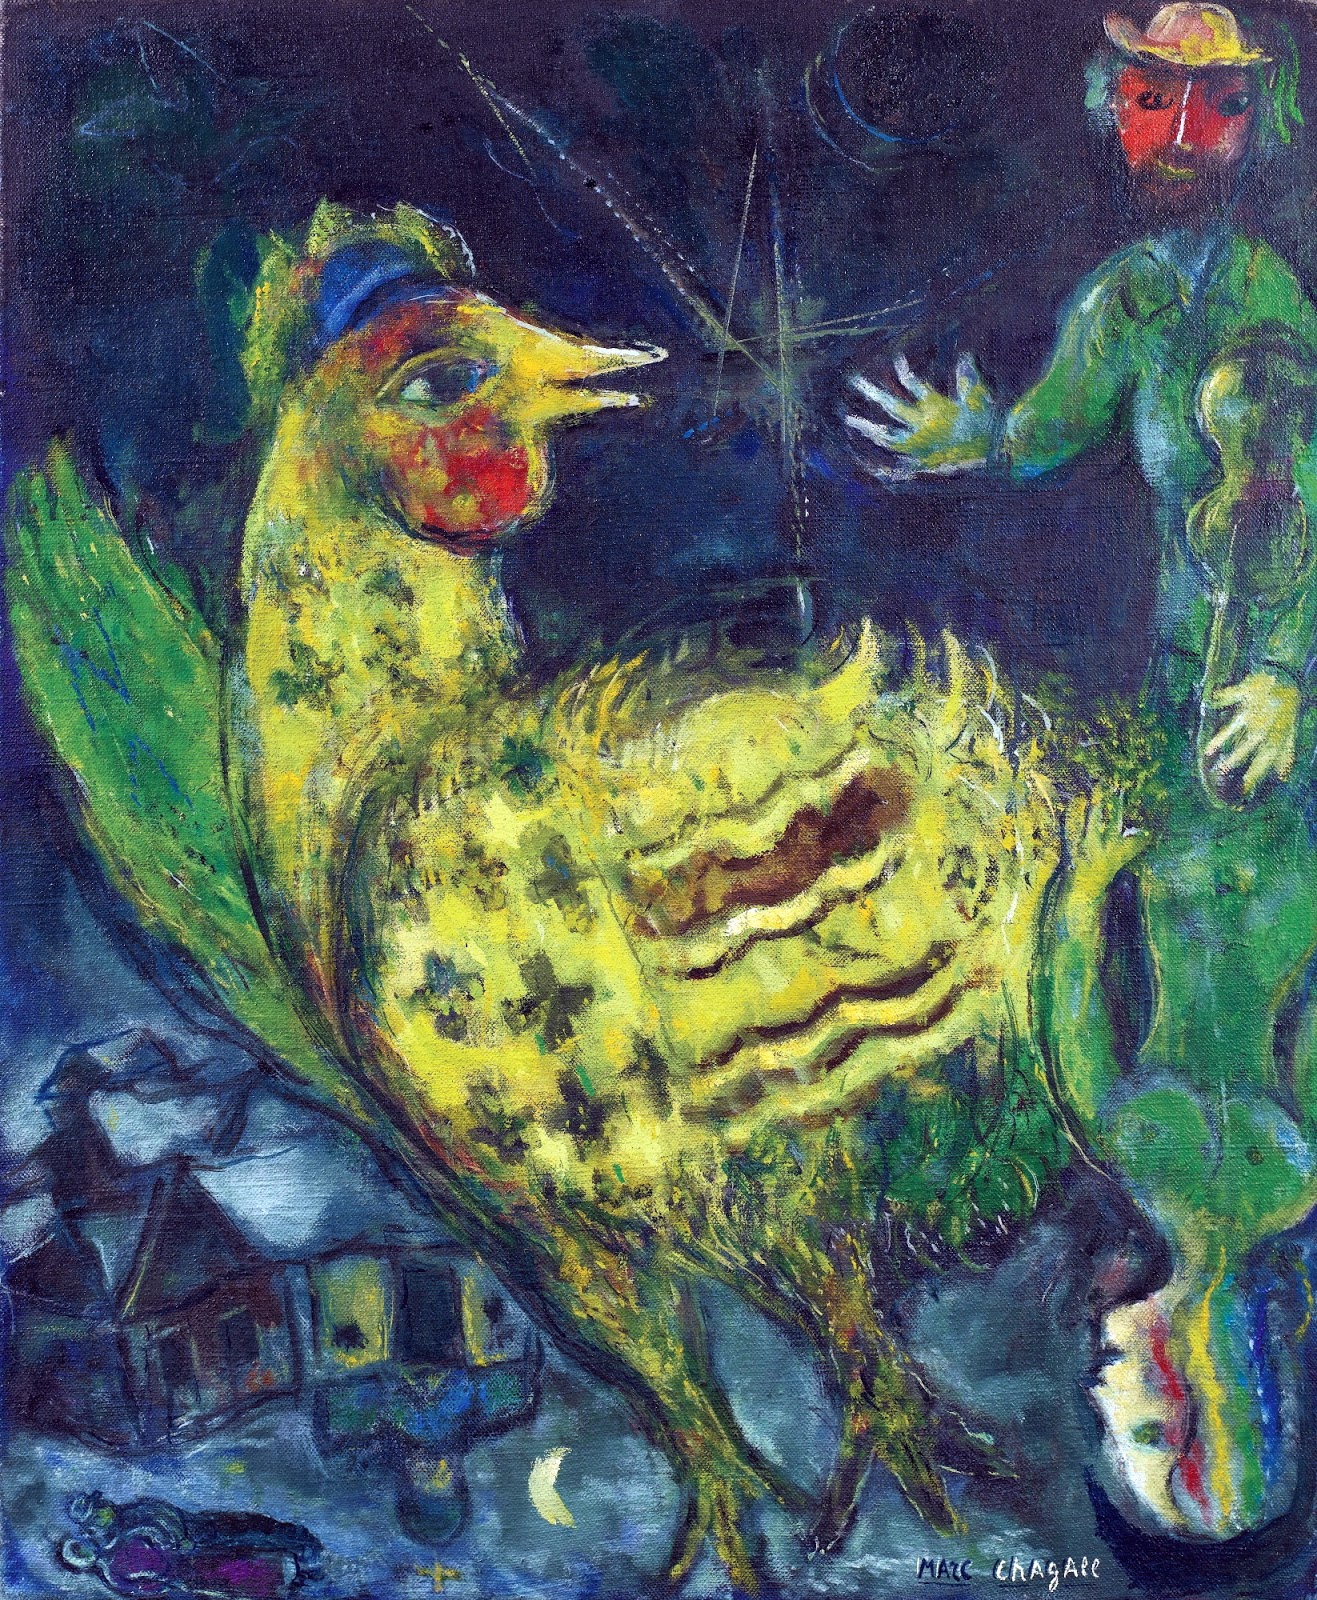 Marc+Chagall-1887-1985 (256).jpg